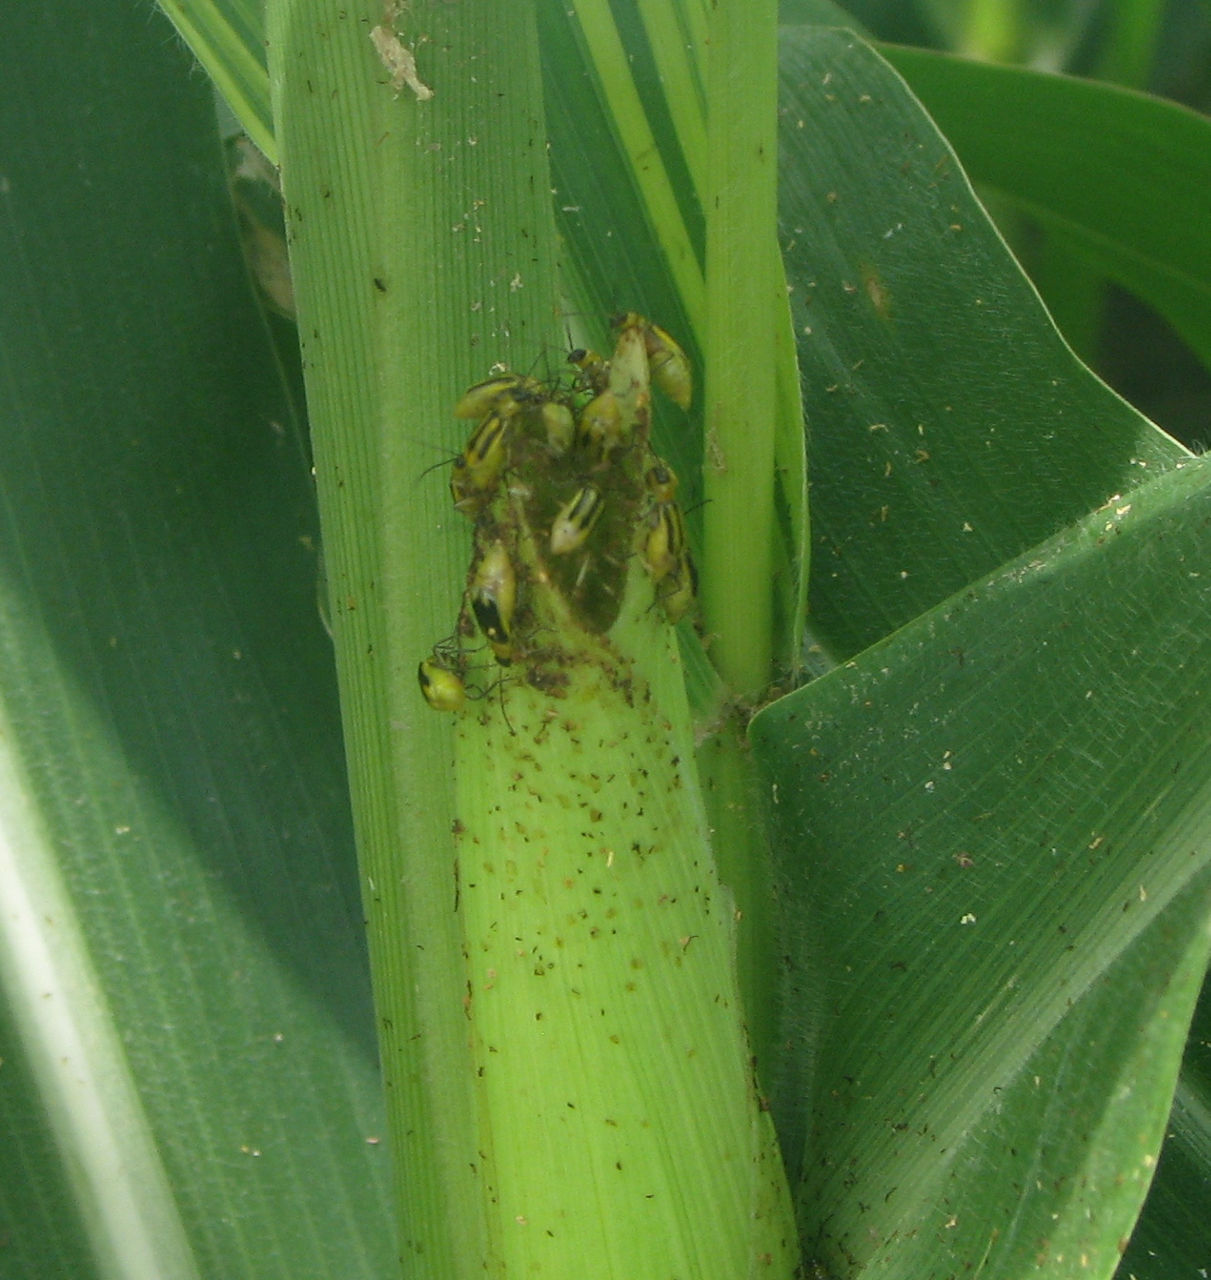 Western corn rootworm beetles feeding on corn silks. 